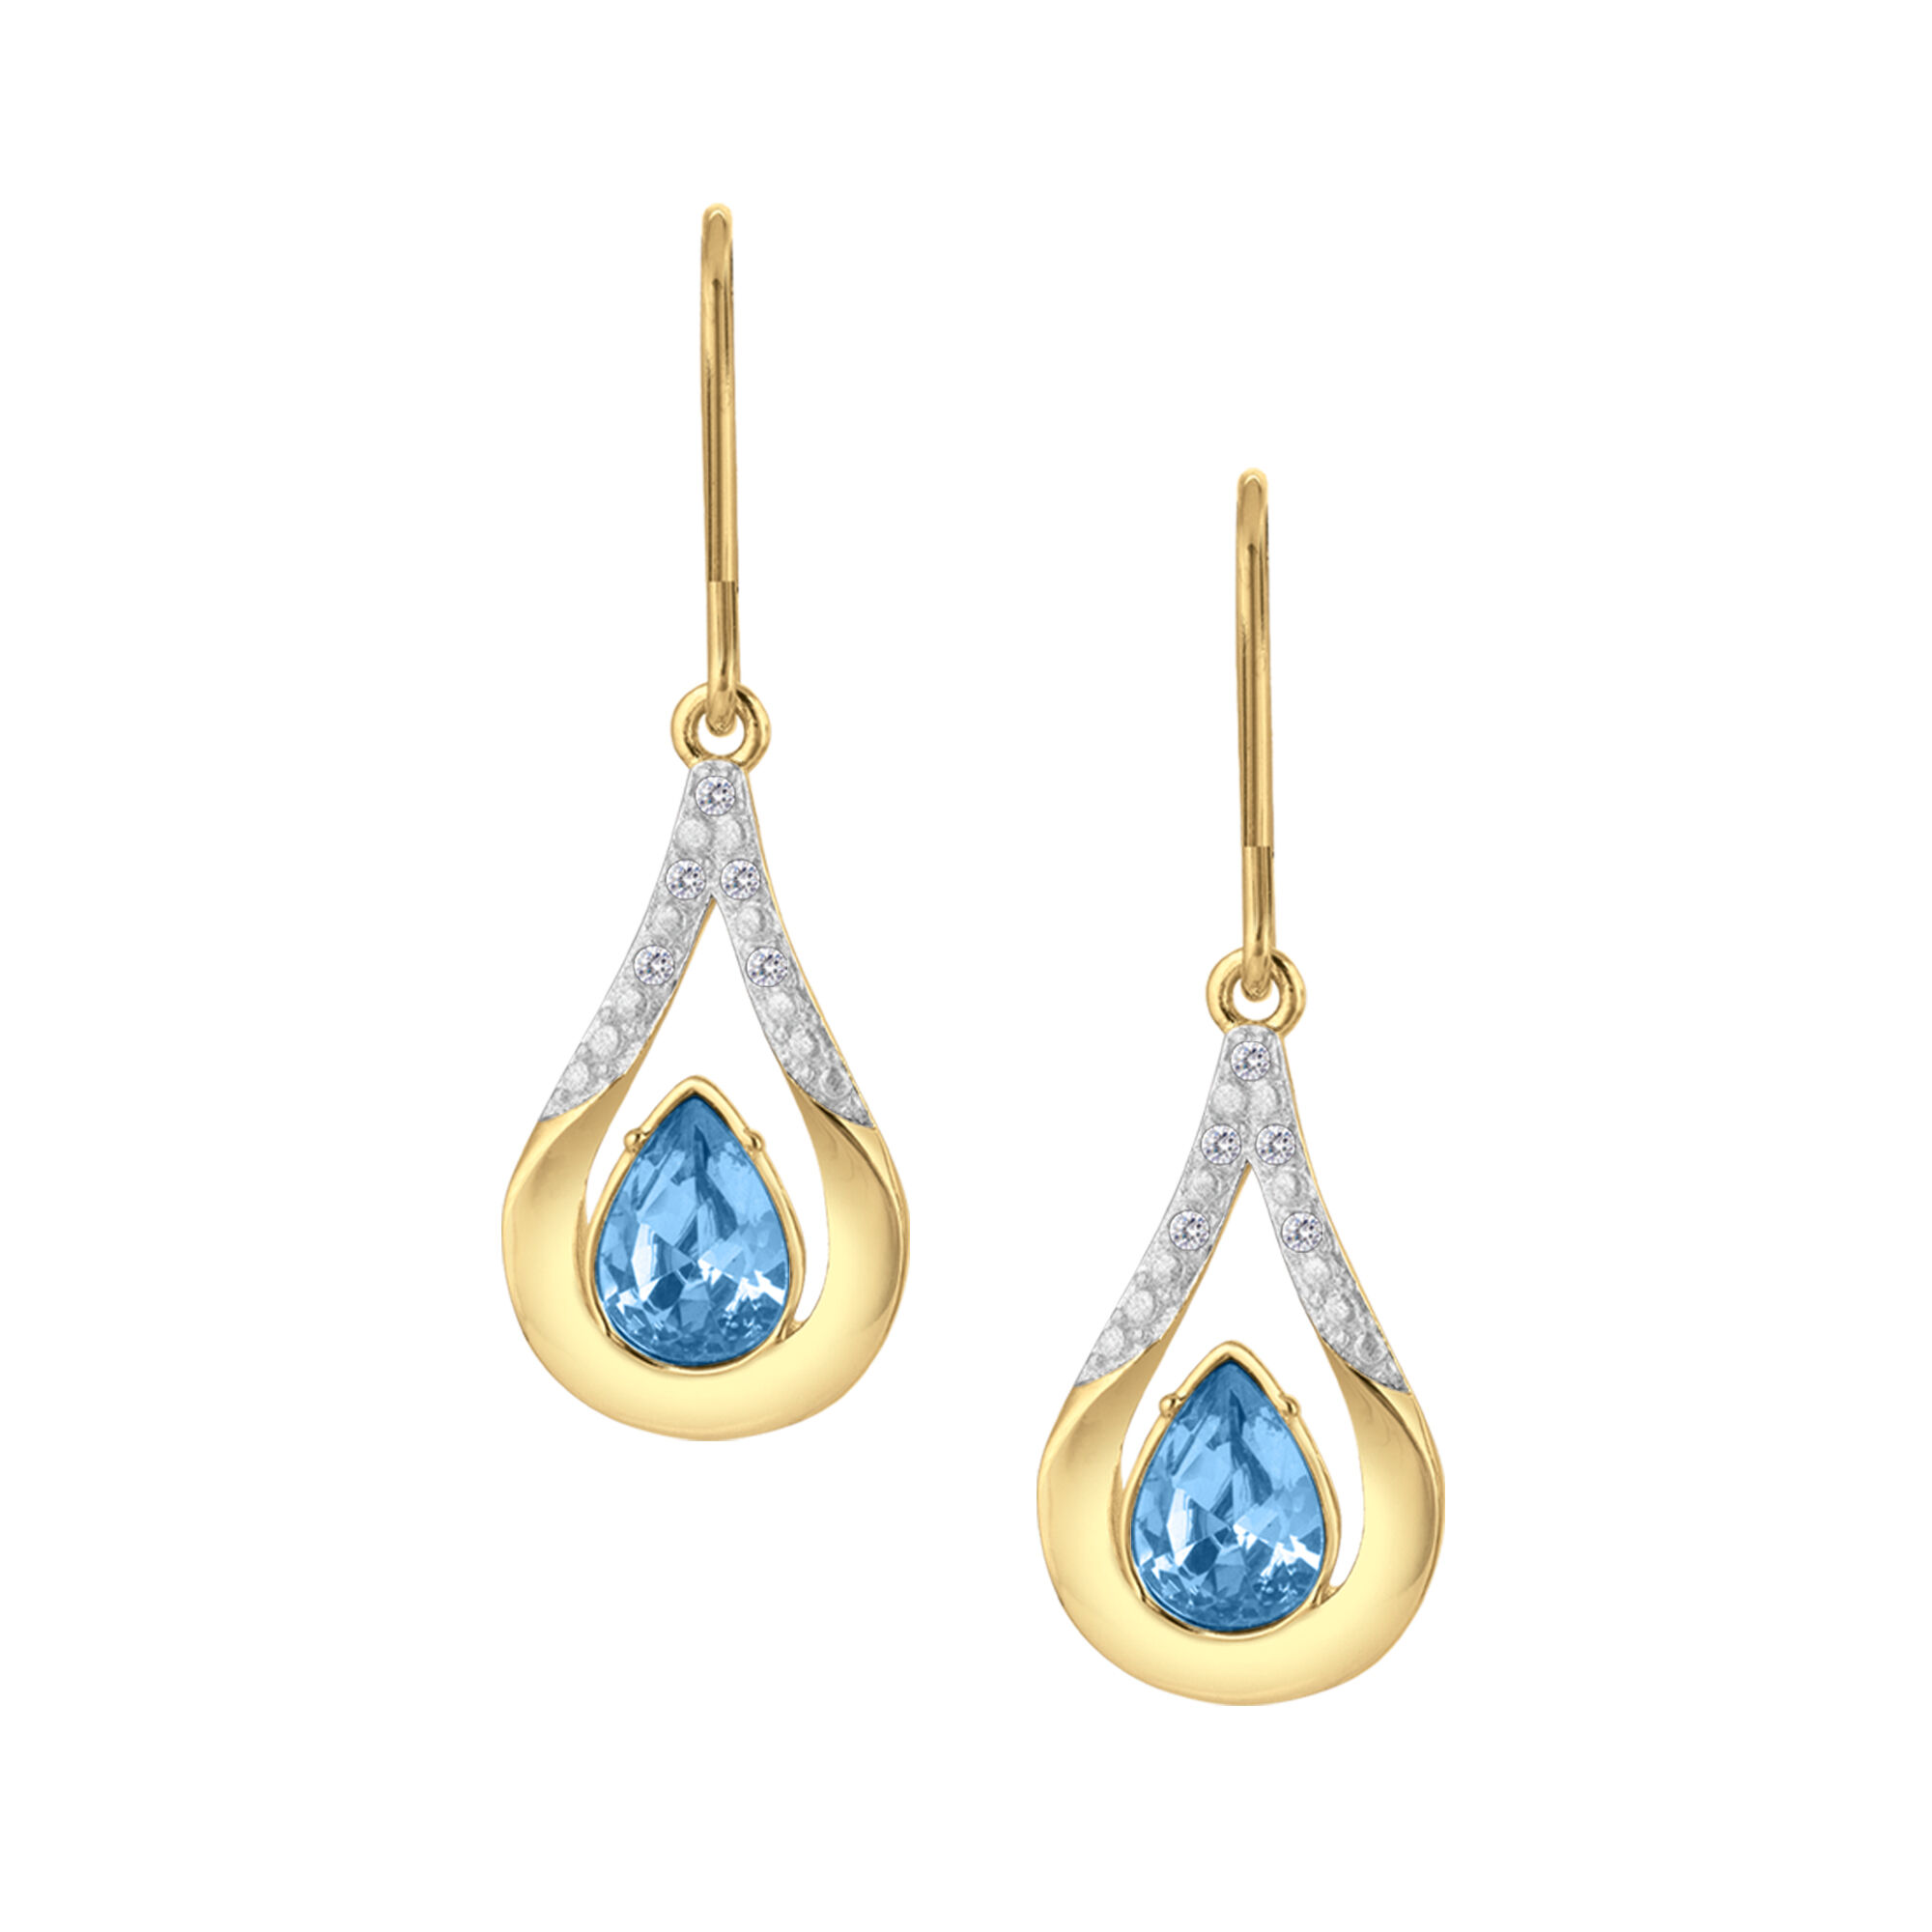 The Birthstone Diamond Drop Earrings 11073 0017 c march